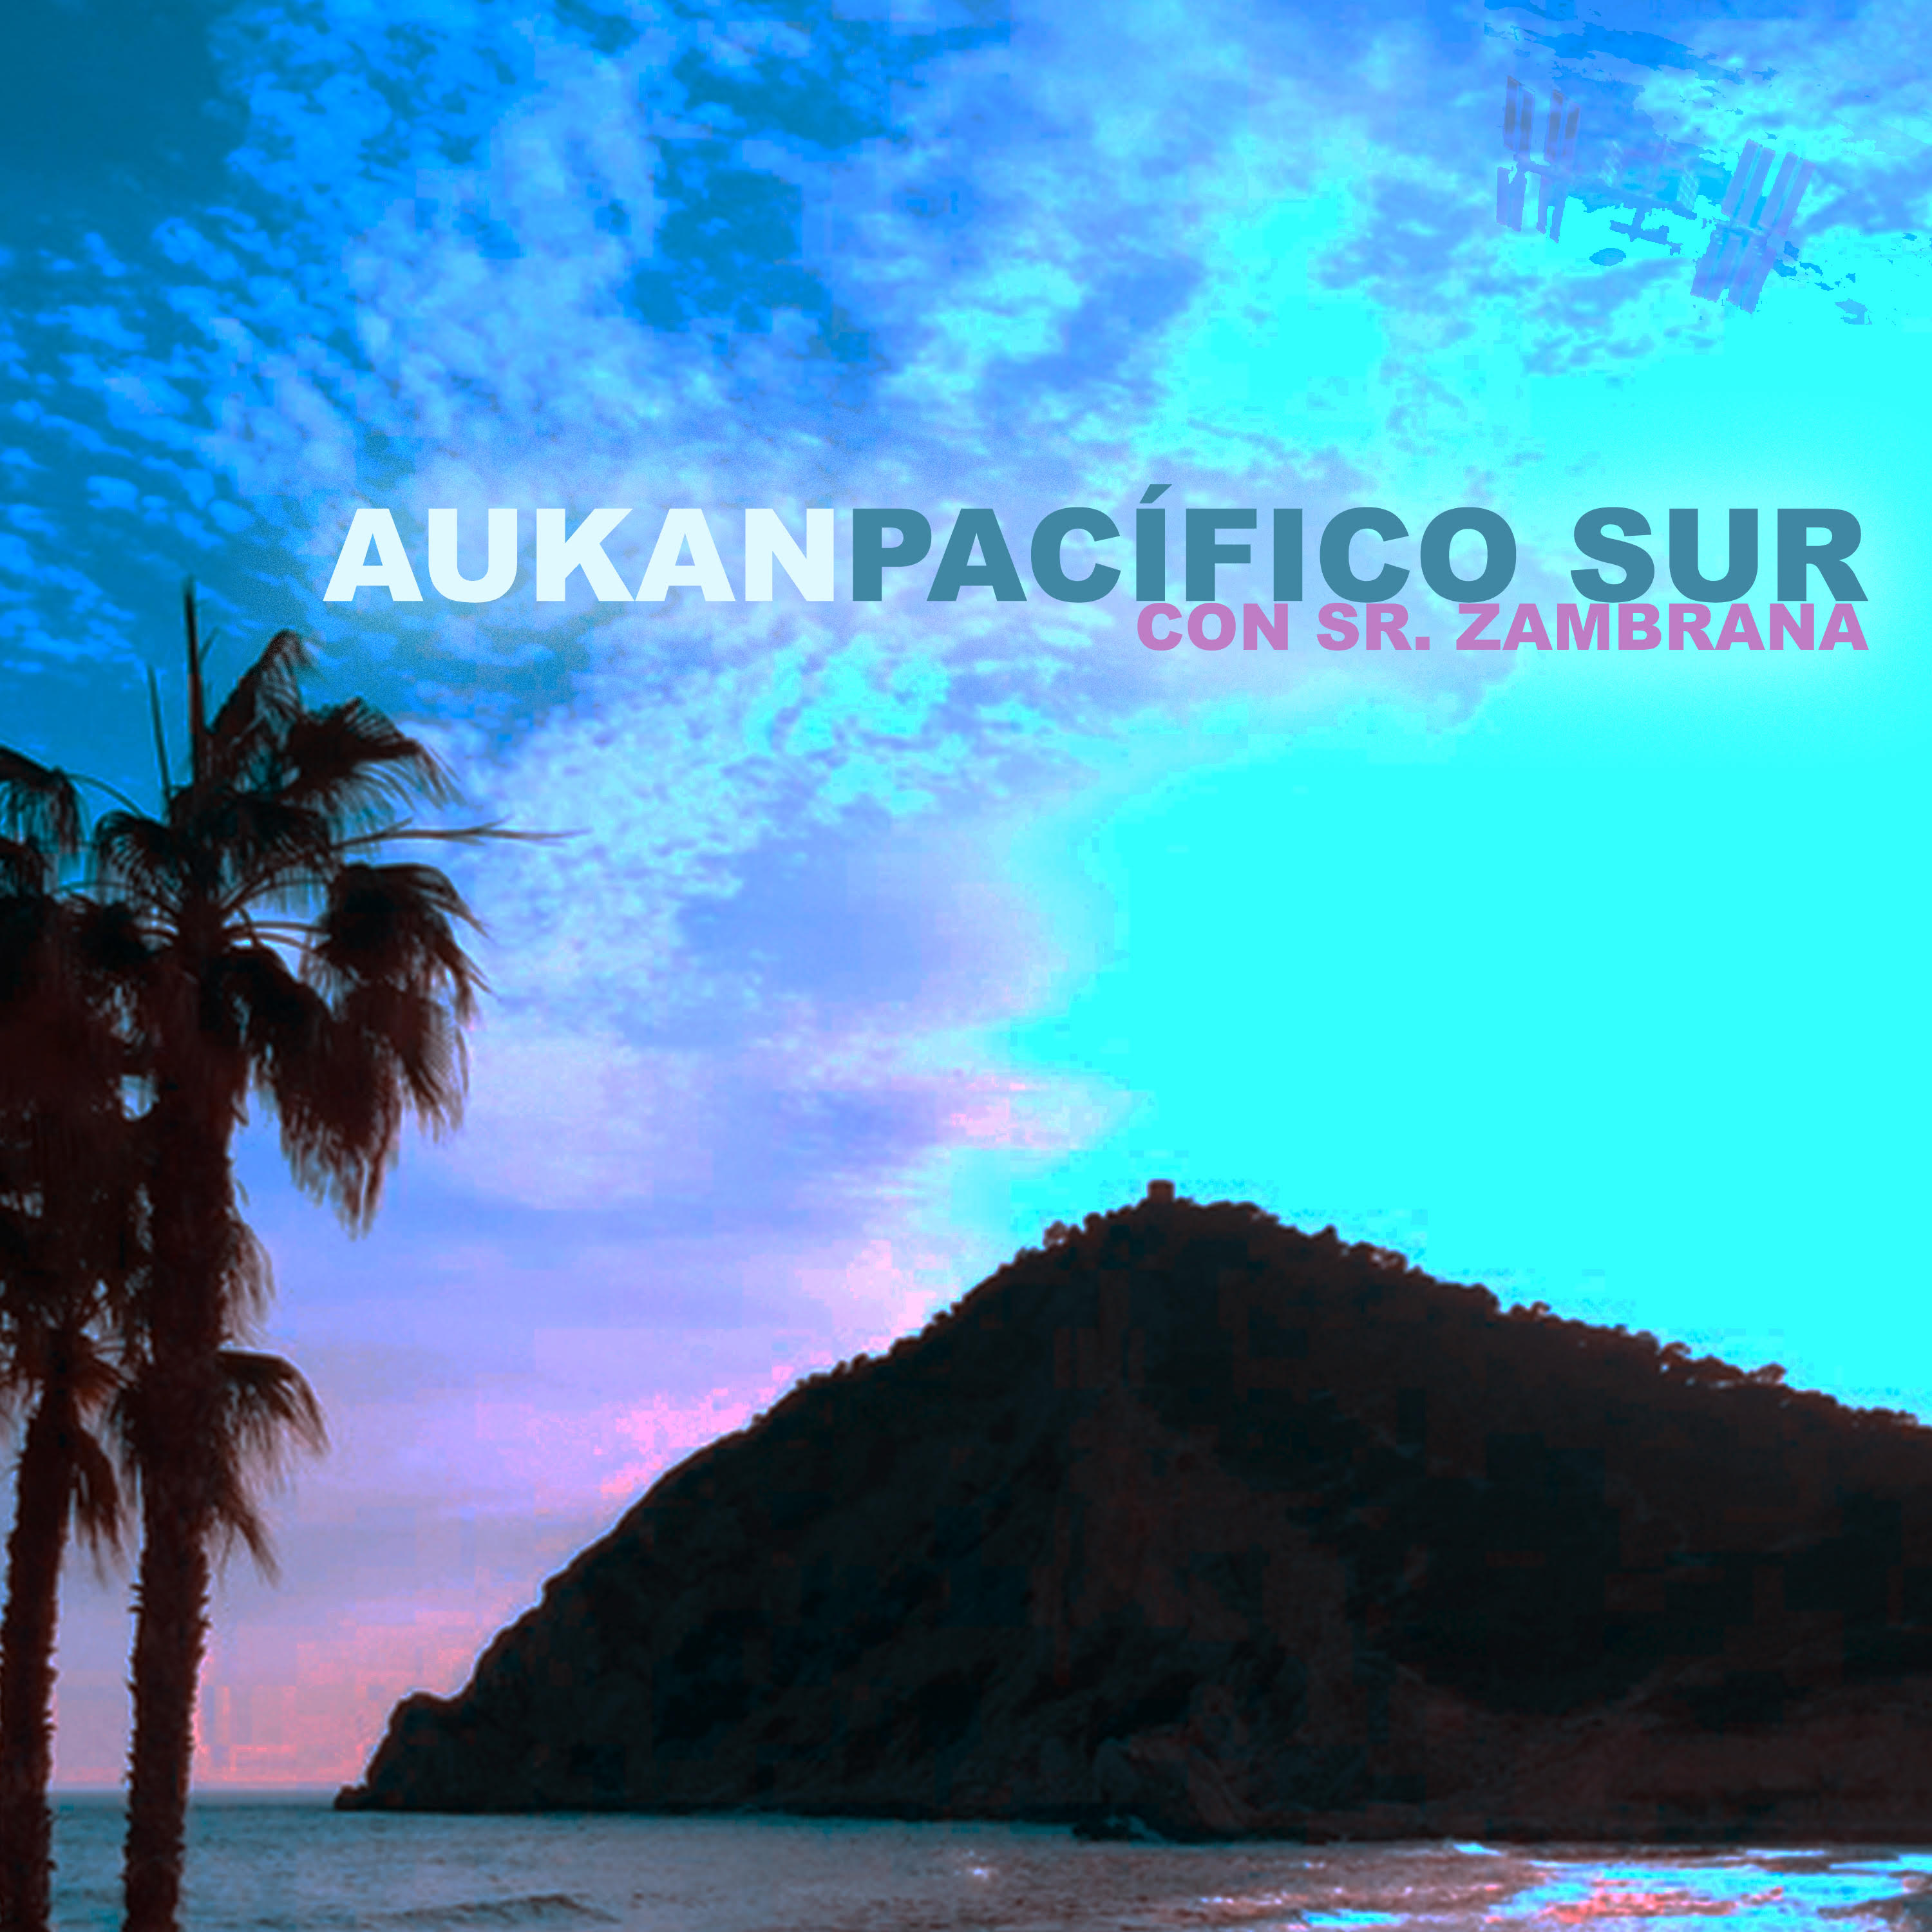 Pacifico_sur_aukan_sr._zambrana